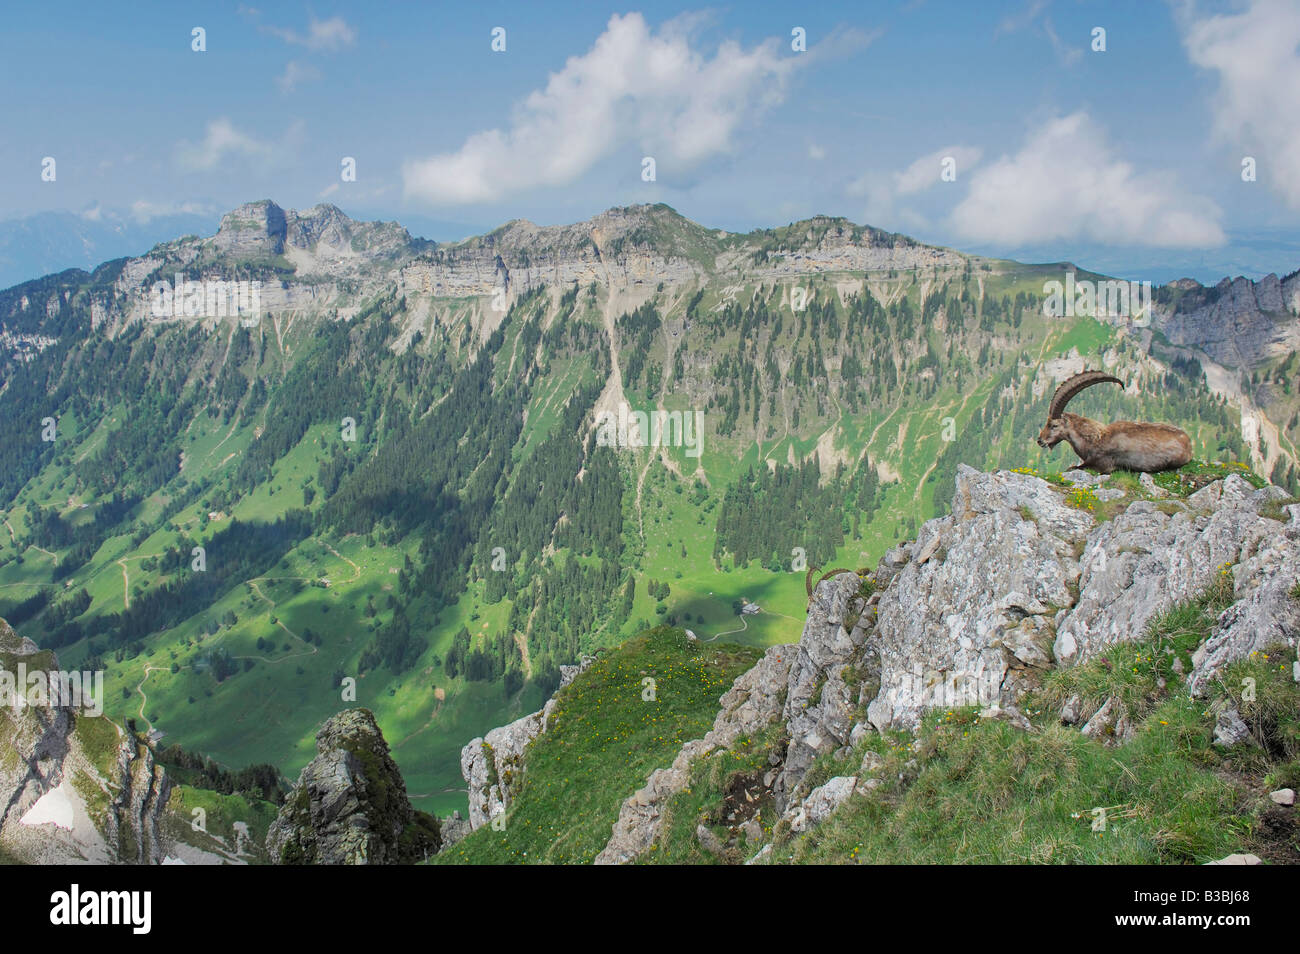 Alpine Ibex (Capra ibex), adult on a ledge with Alps in background, Niederhorn, Interlaken, Switzerland Stock Photo